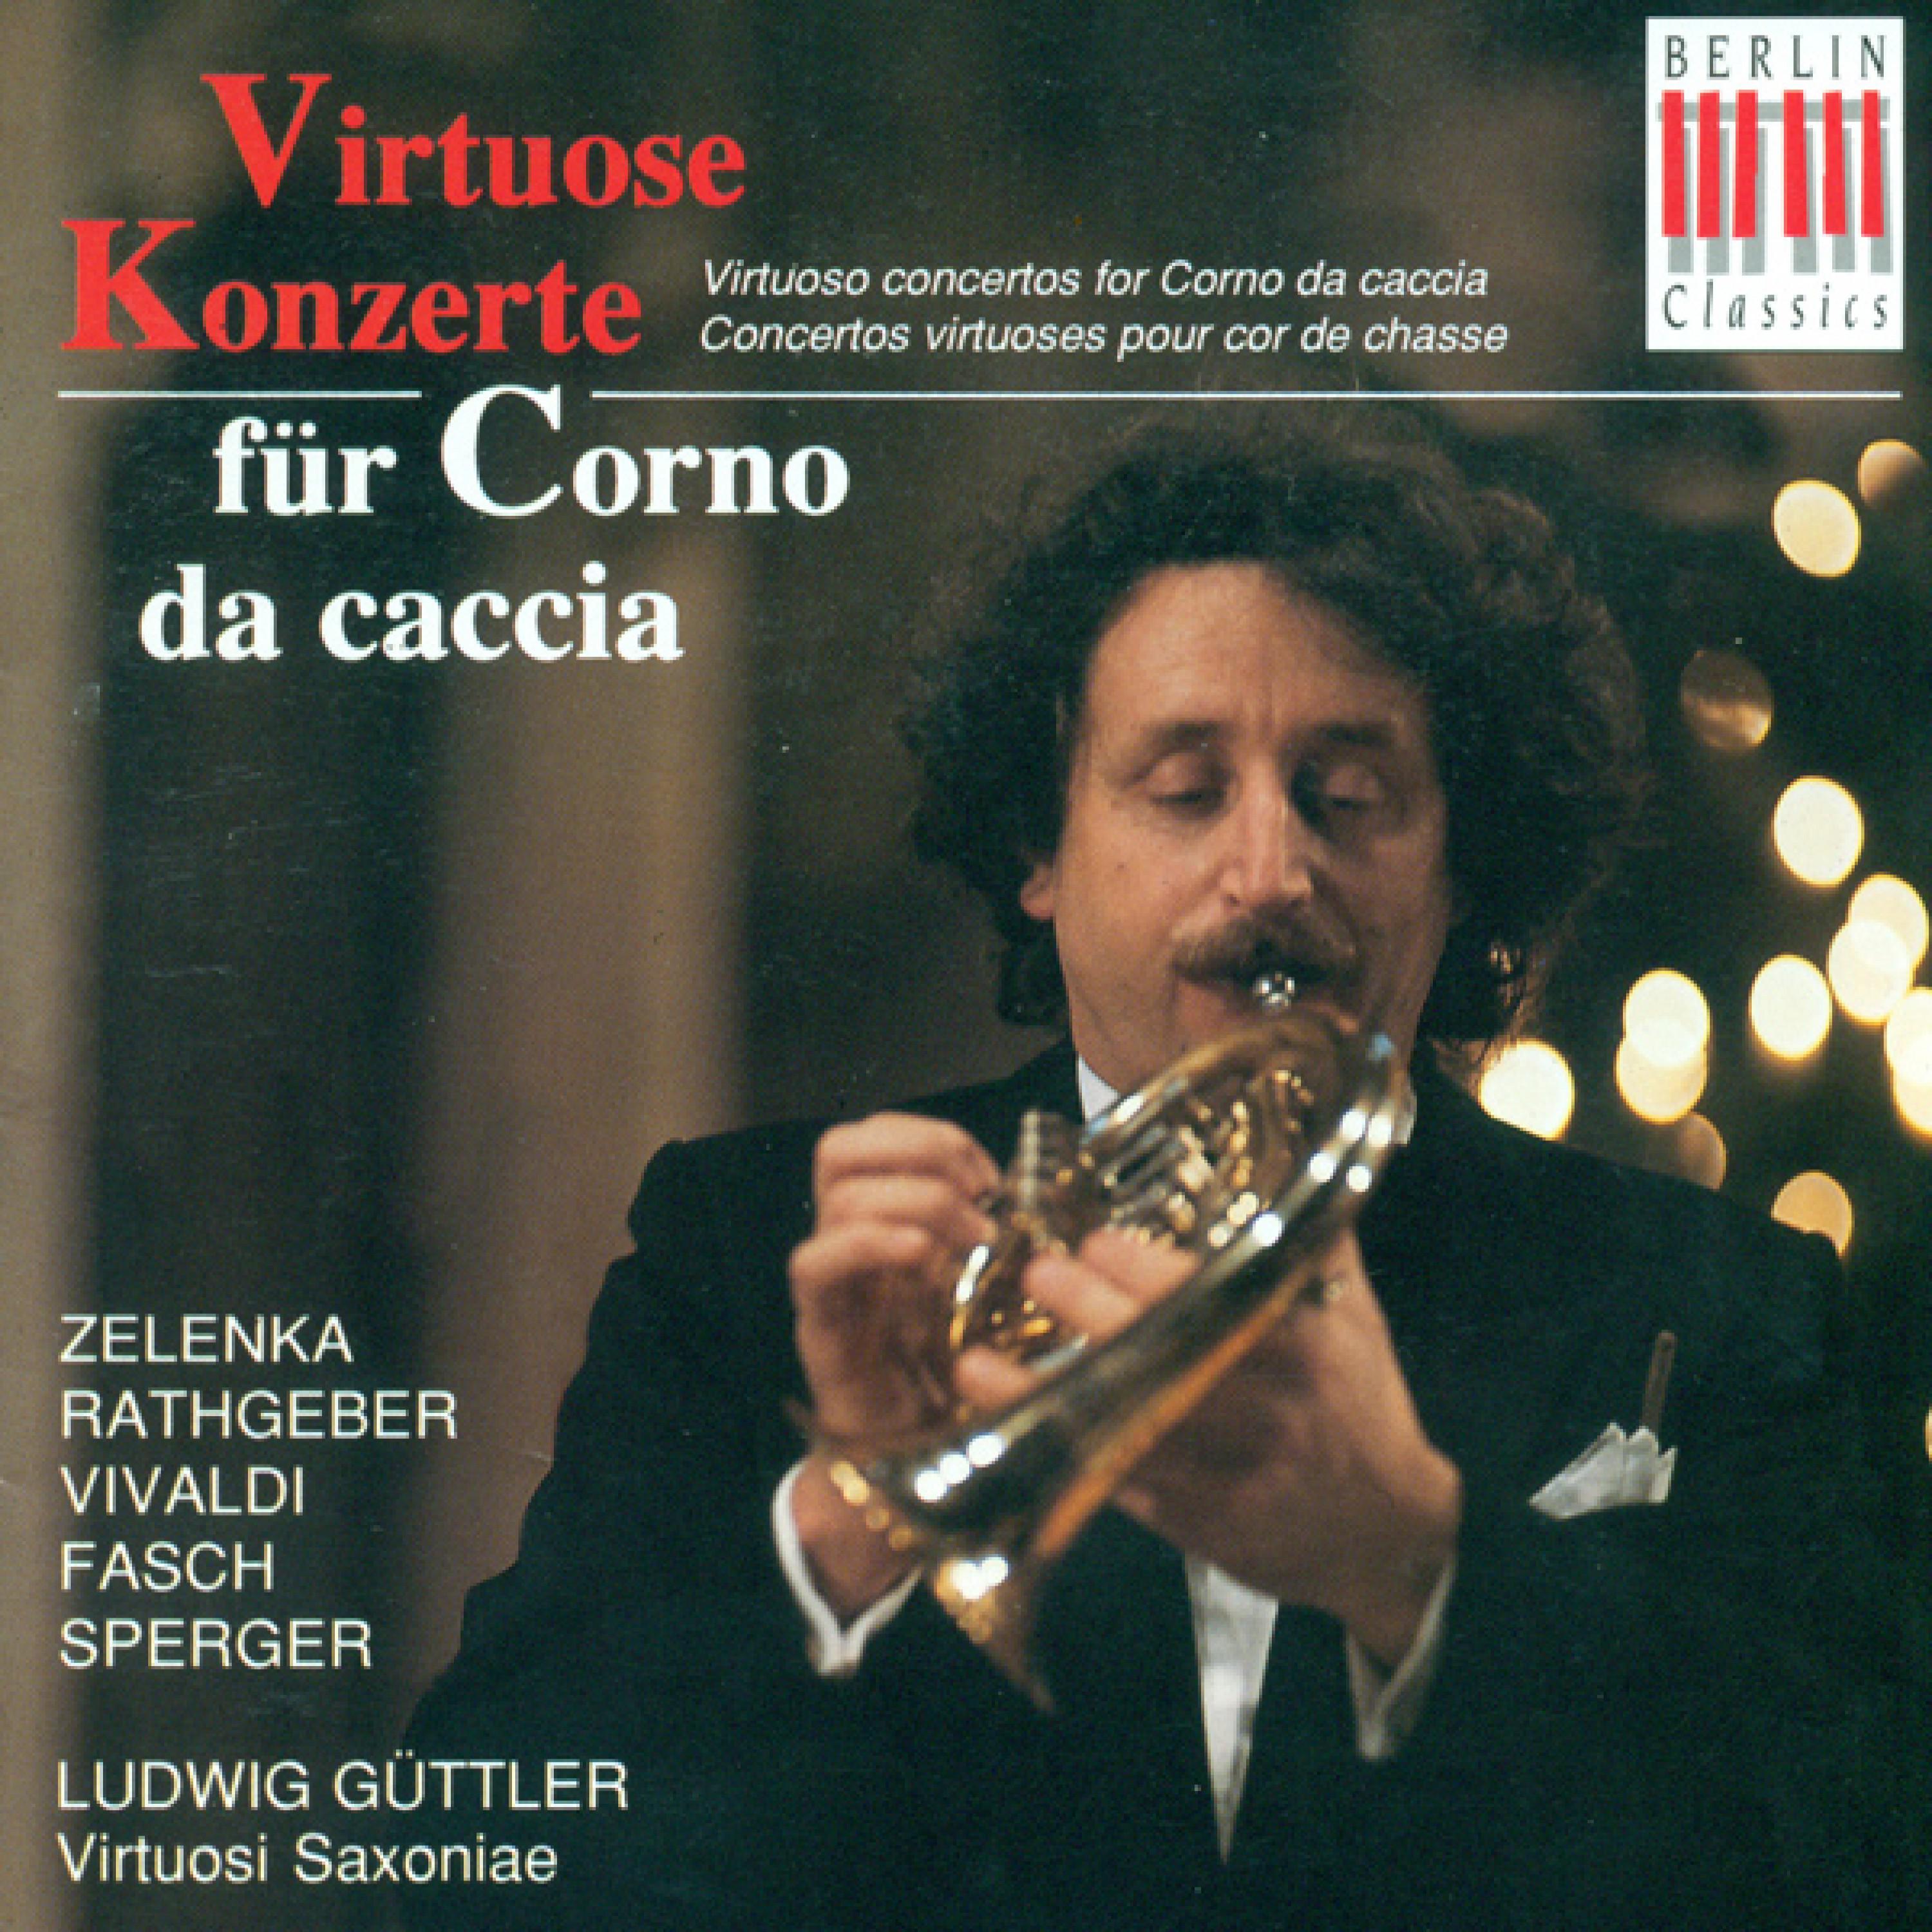 Concerto for 2 Horns in F Major, RV 539: II. Larghetto (arranged by M. Fechner)